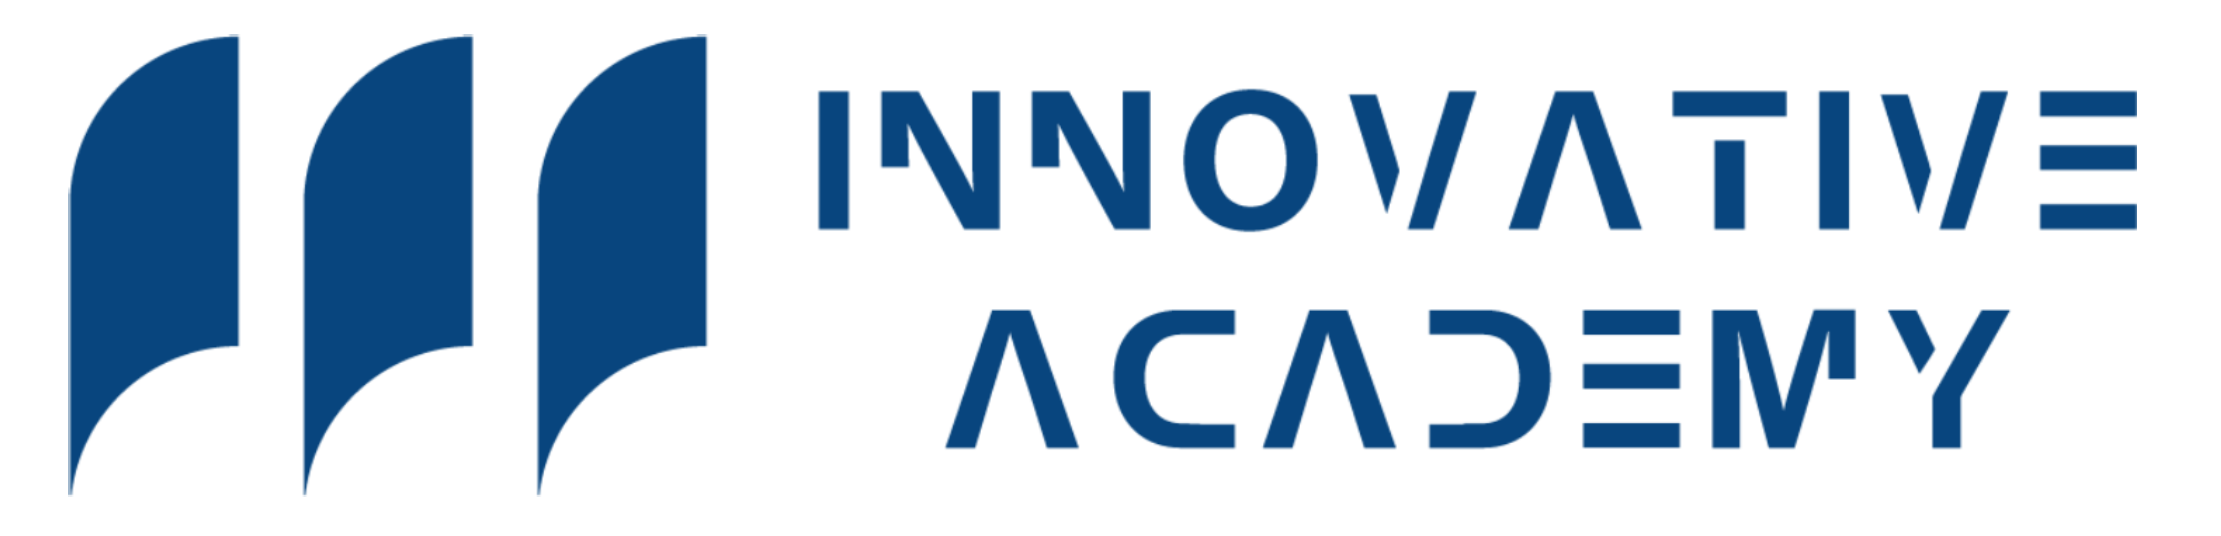 Innovatiove Academy